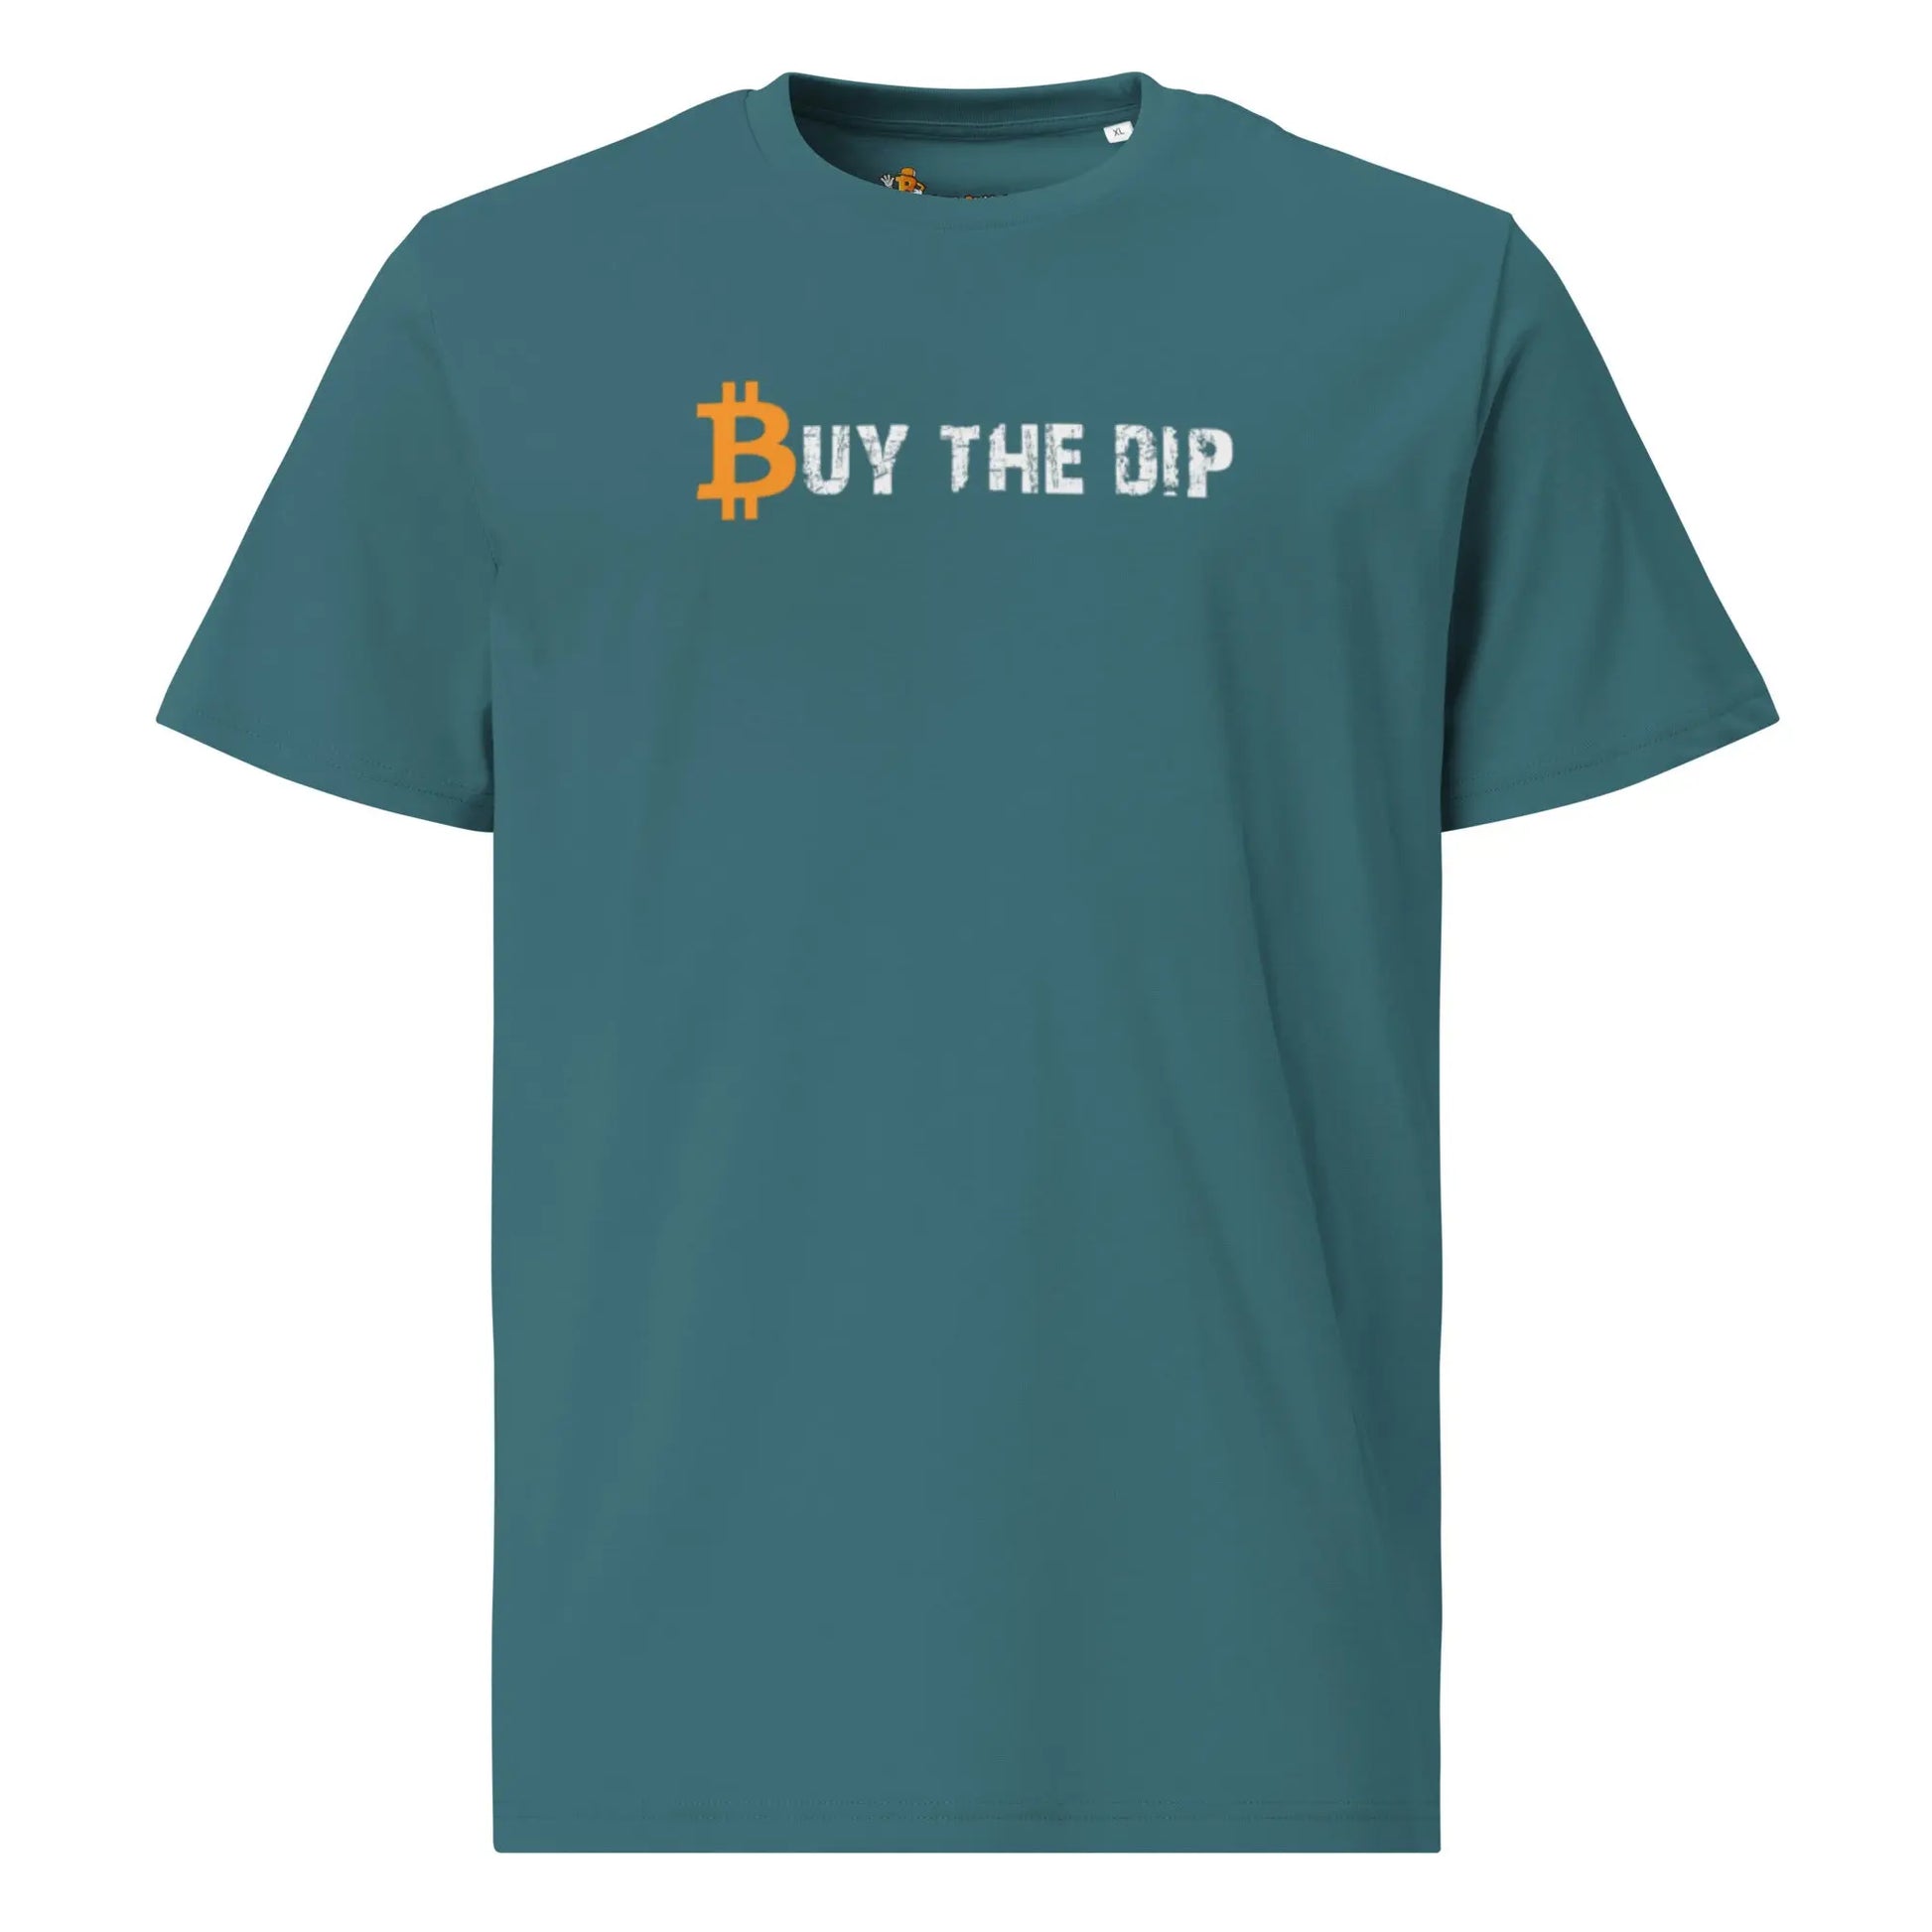 Buy The Dip - Premium Unisex Organic Cotton Bitcoin T-shirt Stargazer Color